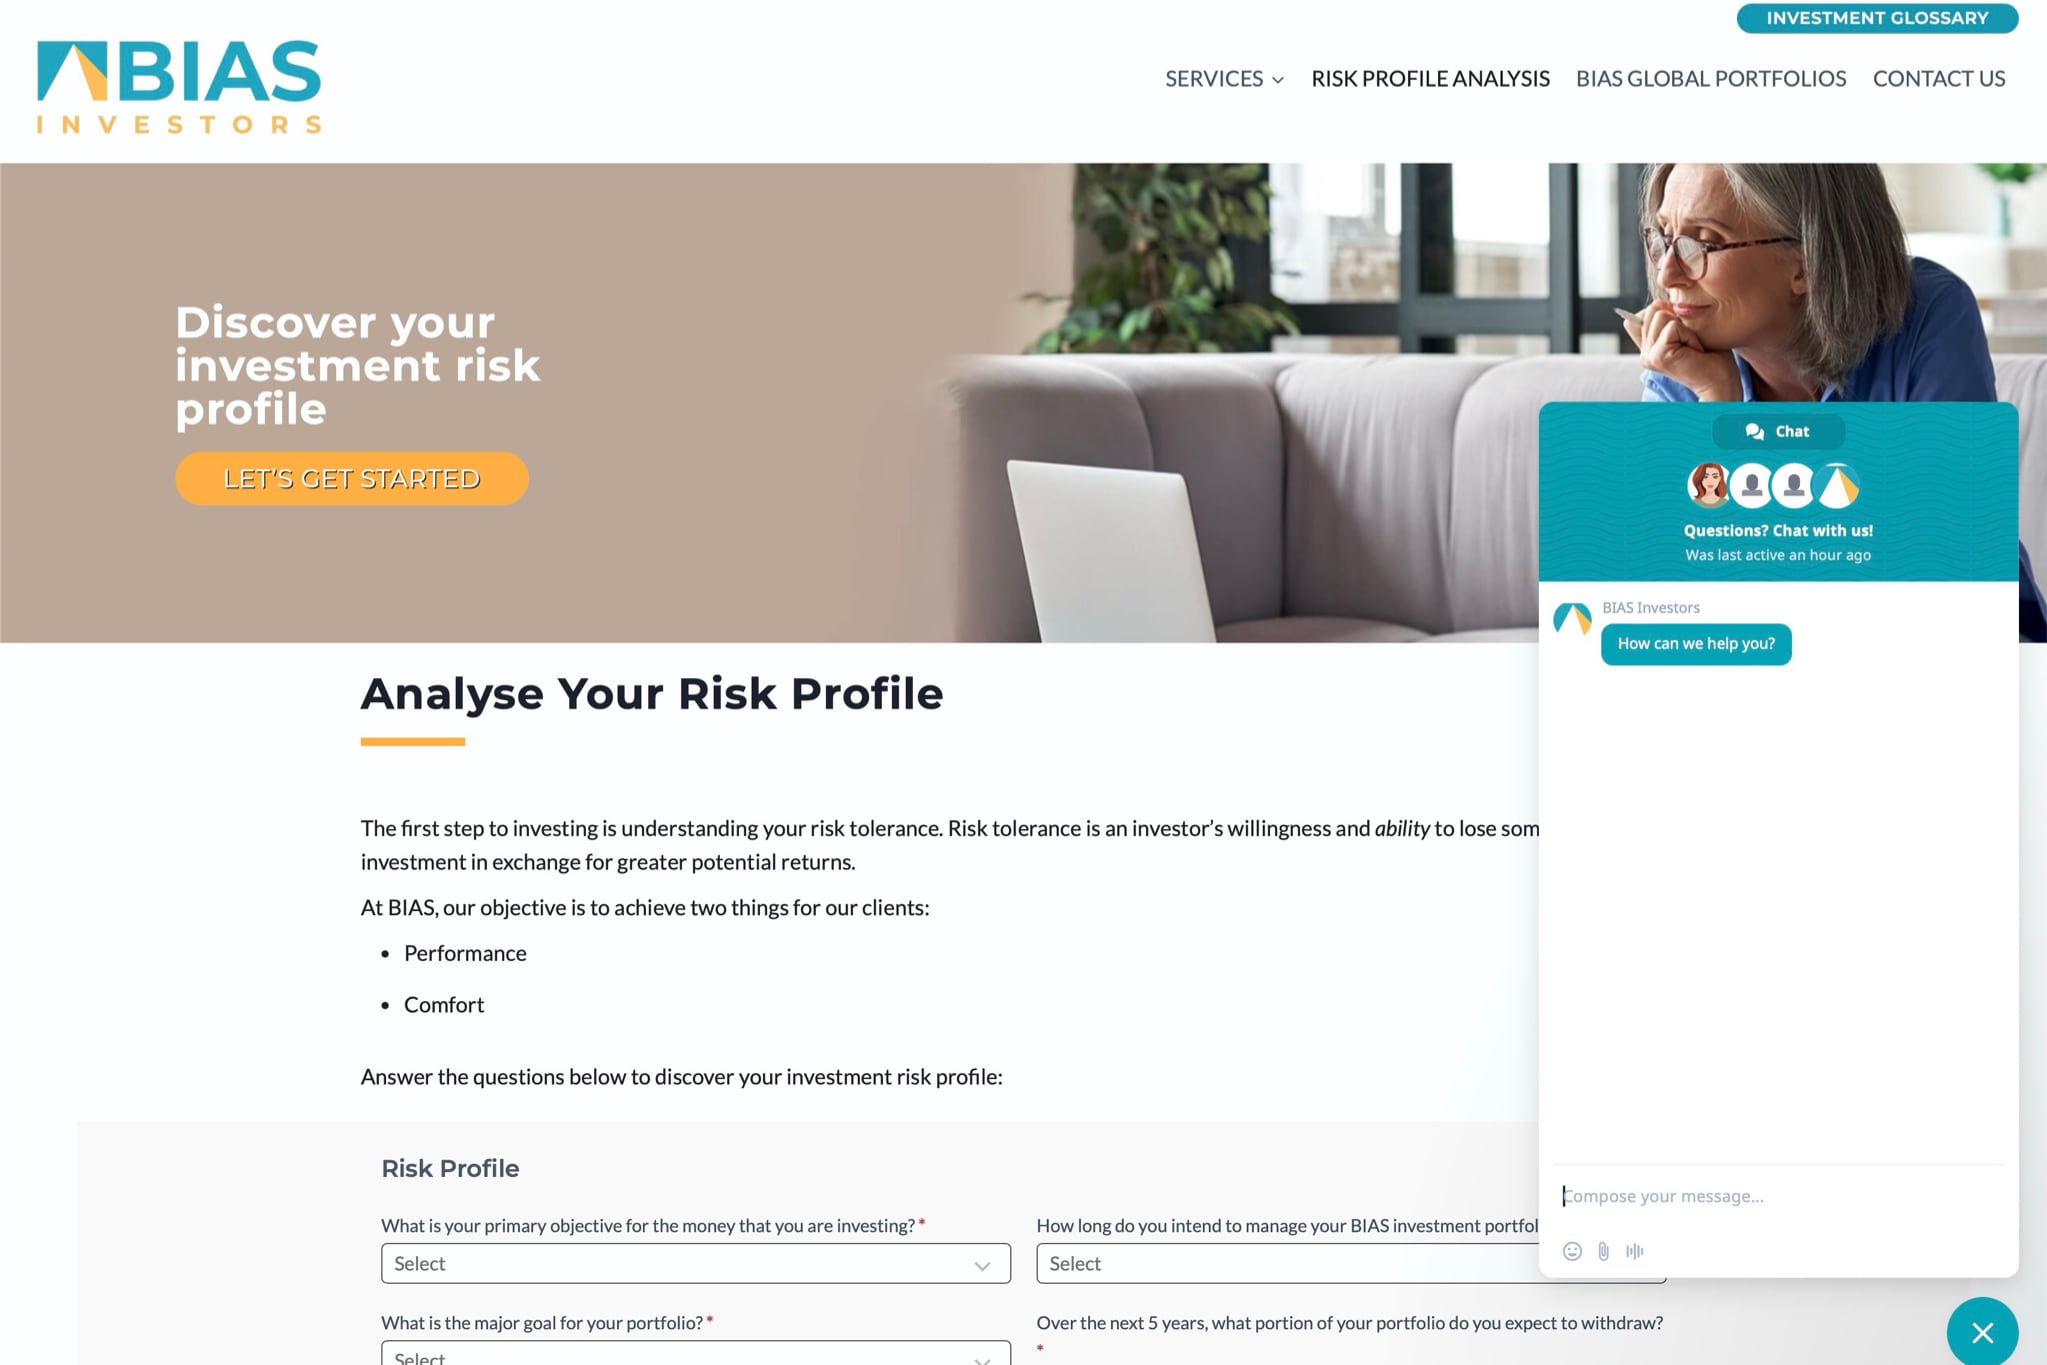 biasinvestors.com inside page screenshot